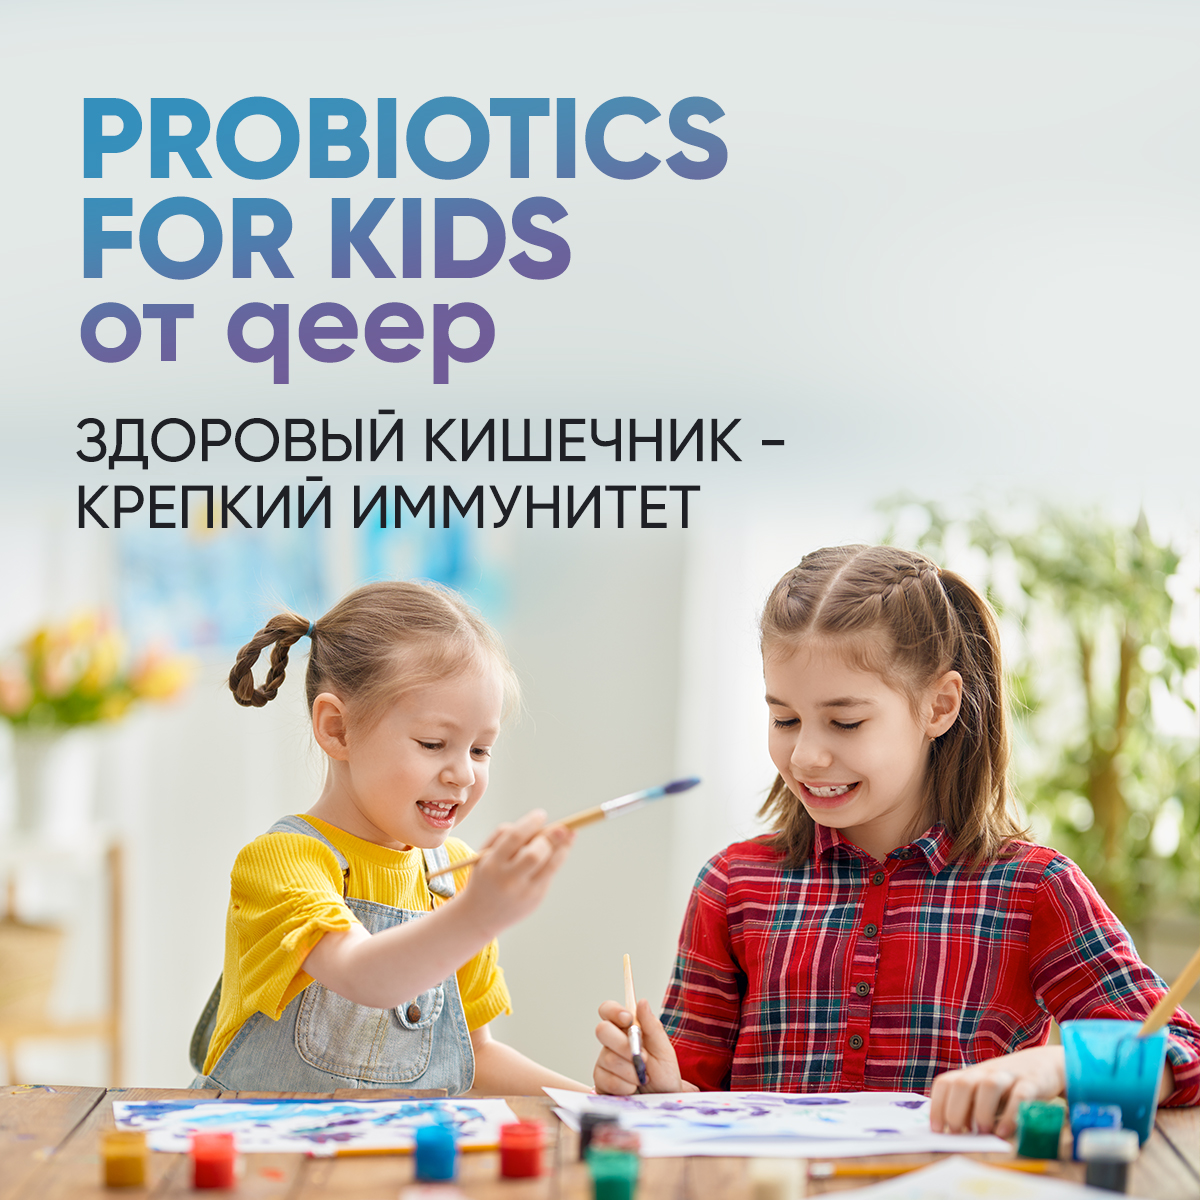 Бад пробиотик для детей qeep пребиотики для иммунитета детей - фото 8